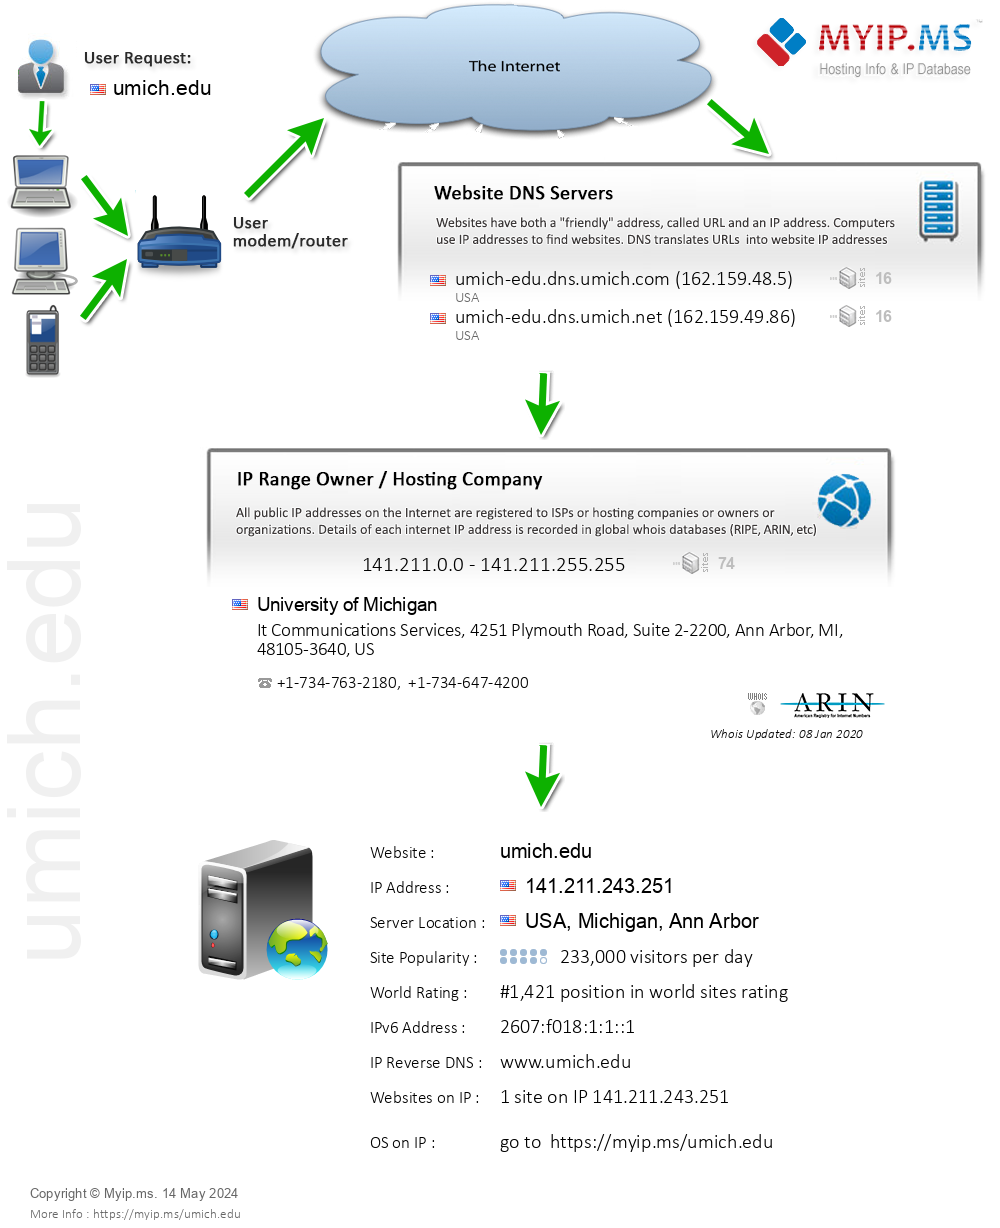 Umich.edu - Website Hosting Visual IP Diagram